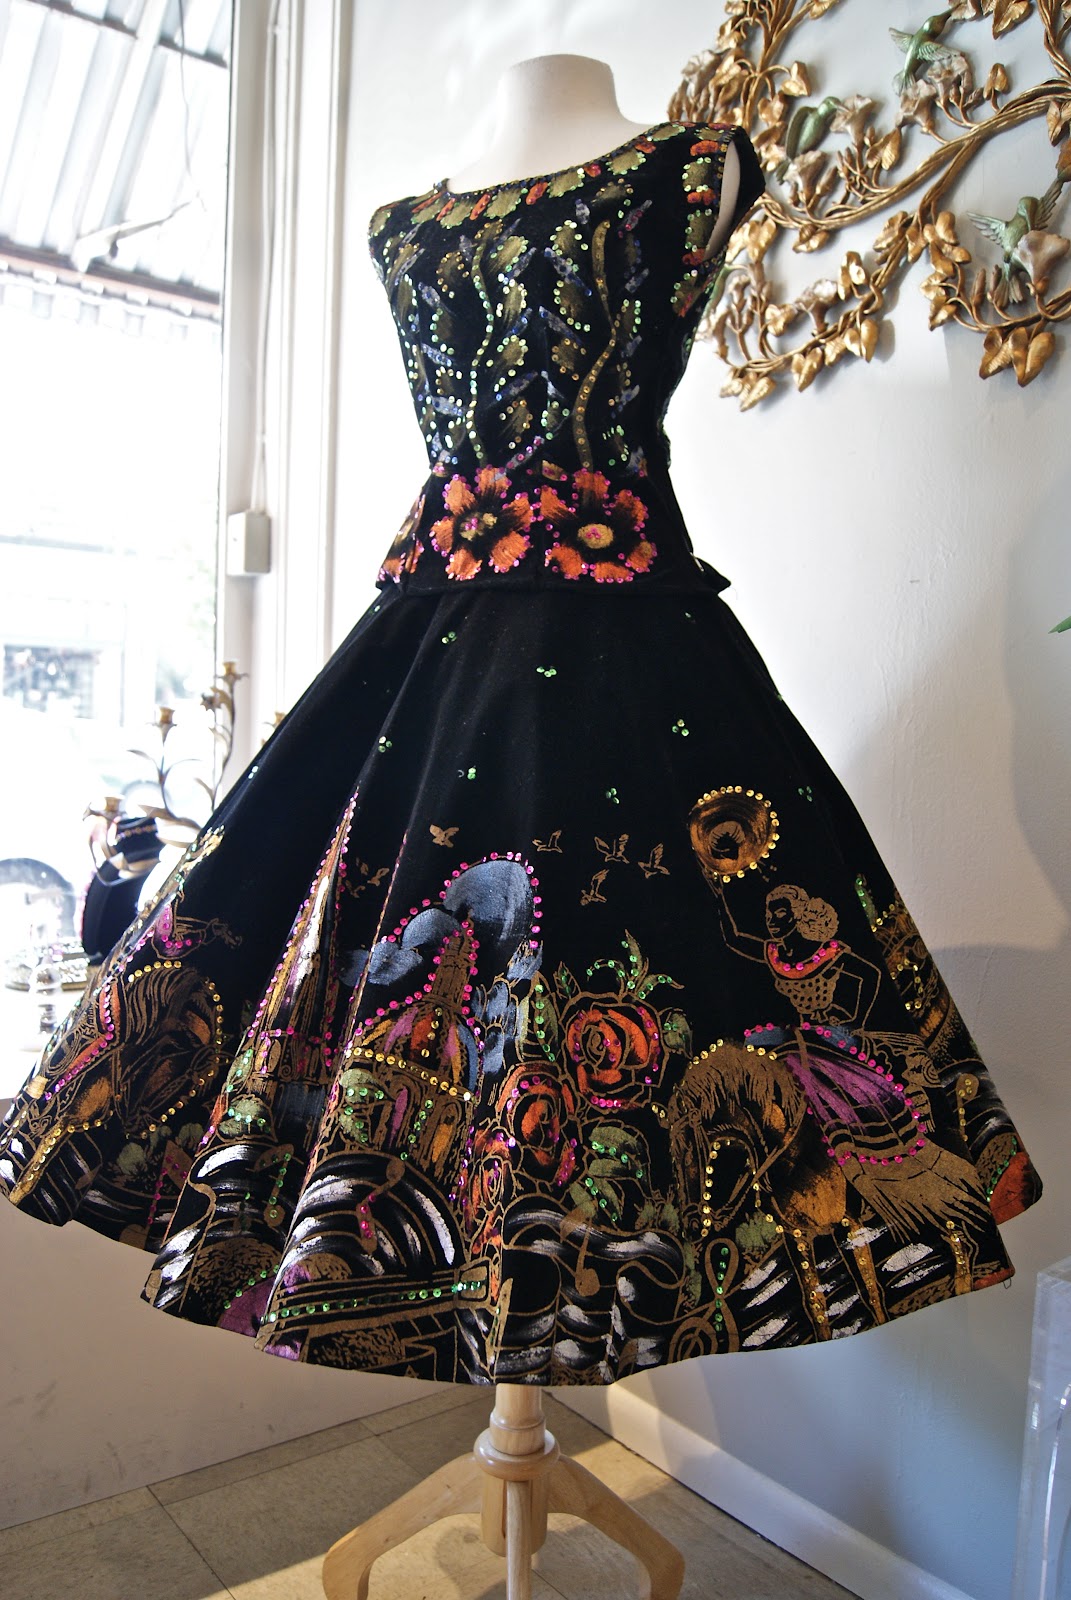 Xtabay Vintage Clothing Boutique - Portland, Oregon: Top 20 Dresses ...